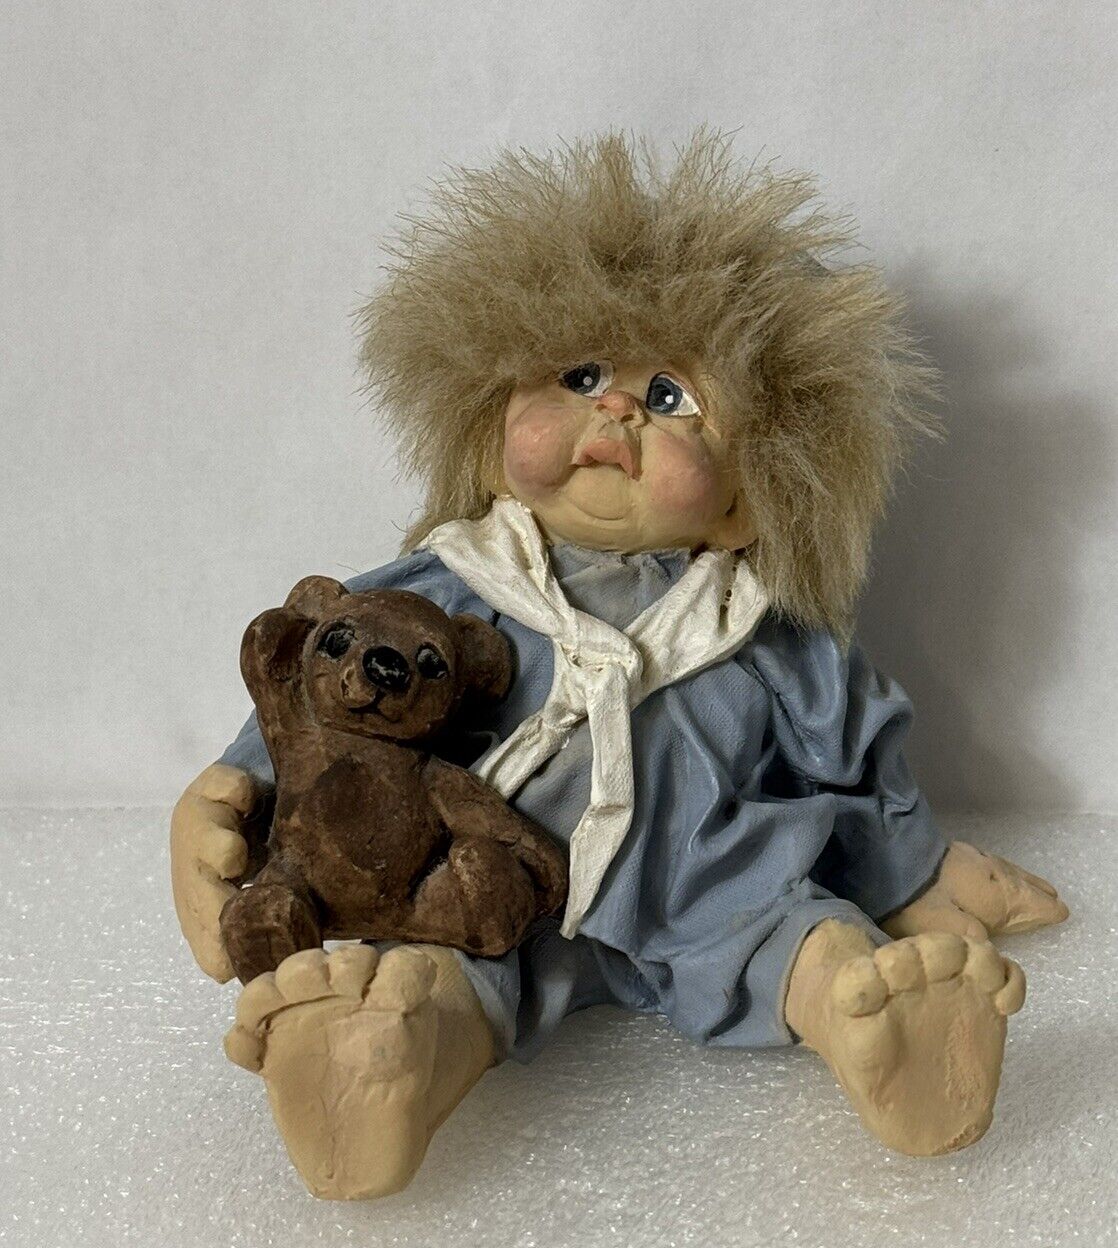 1993 Vintage Cast Art Industries Creamsicles Baby With Teddy Bear Figurine